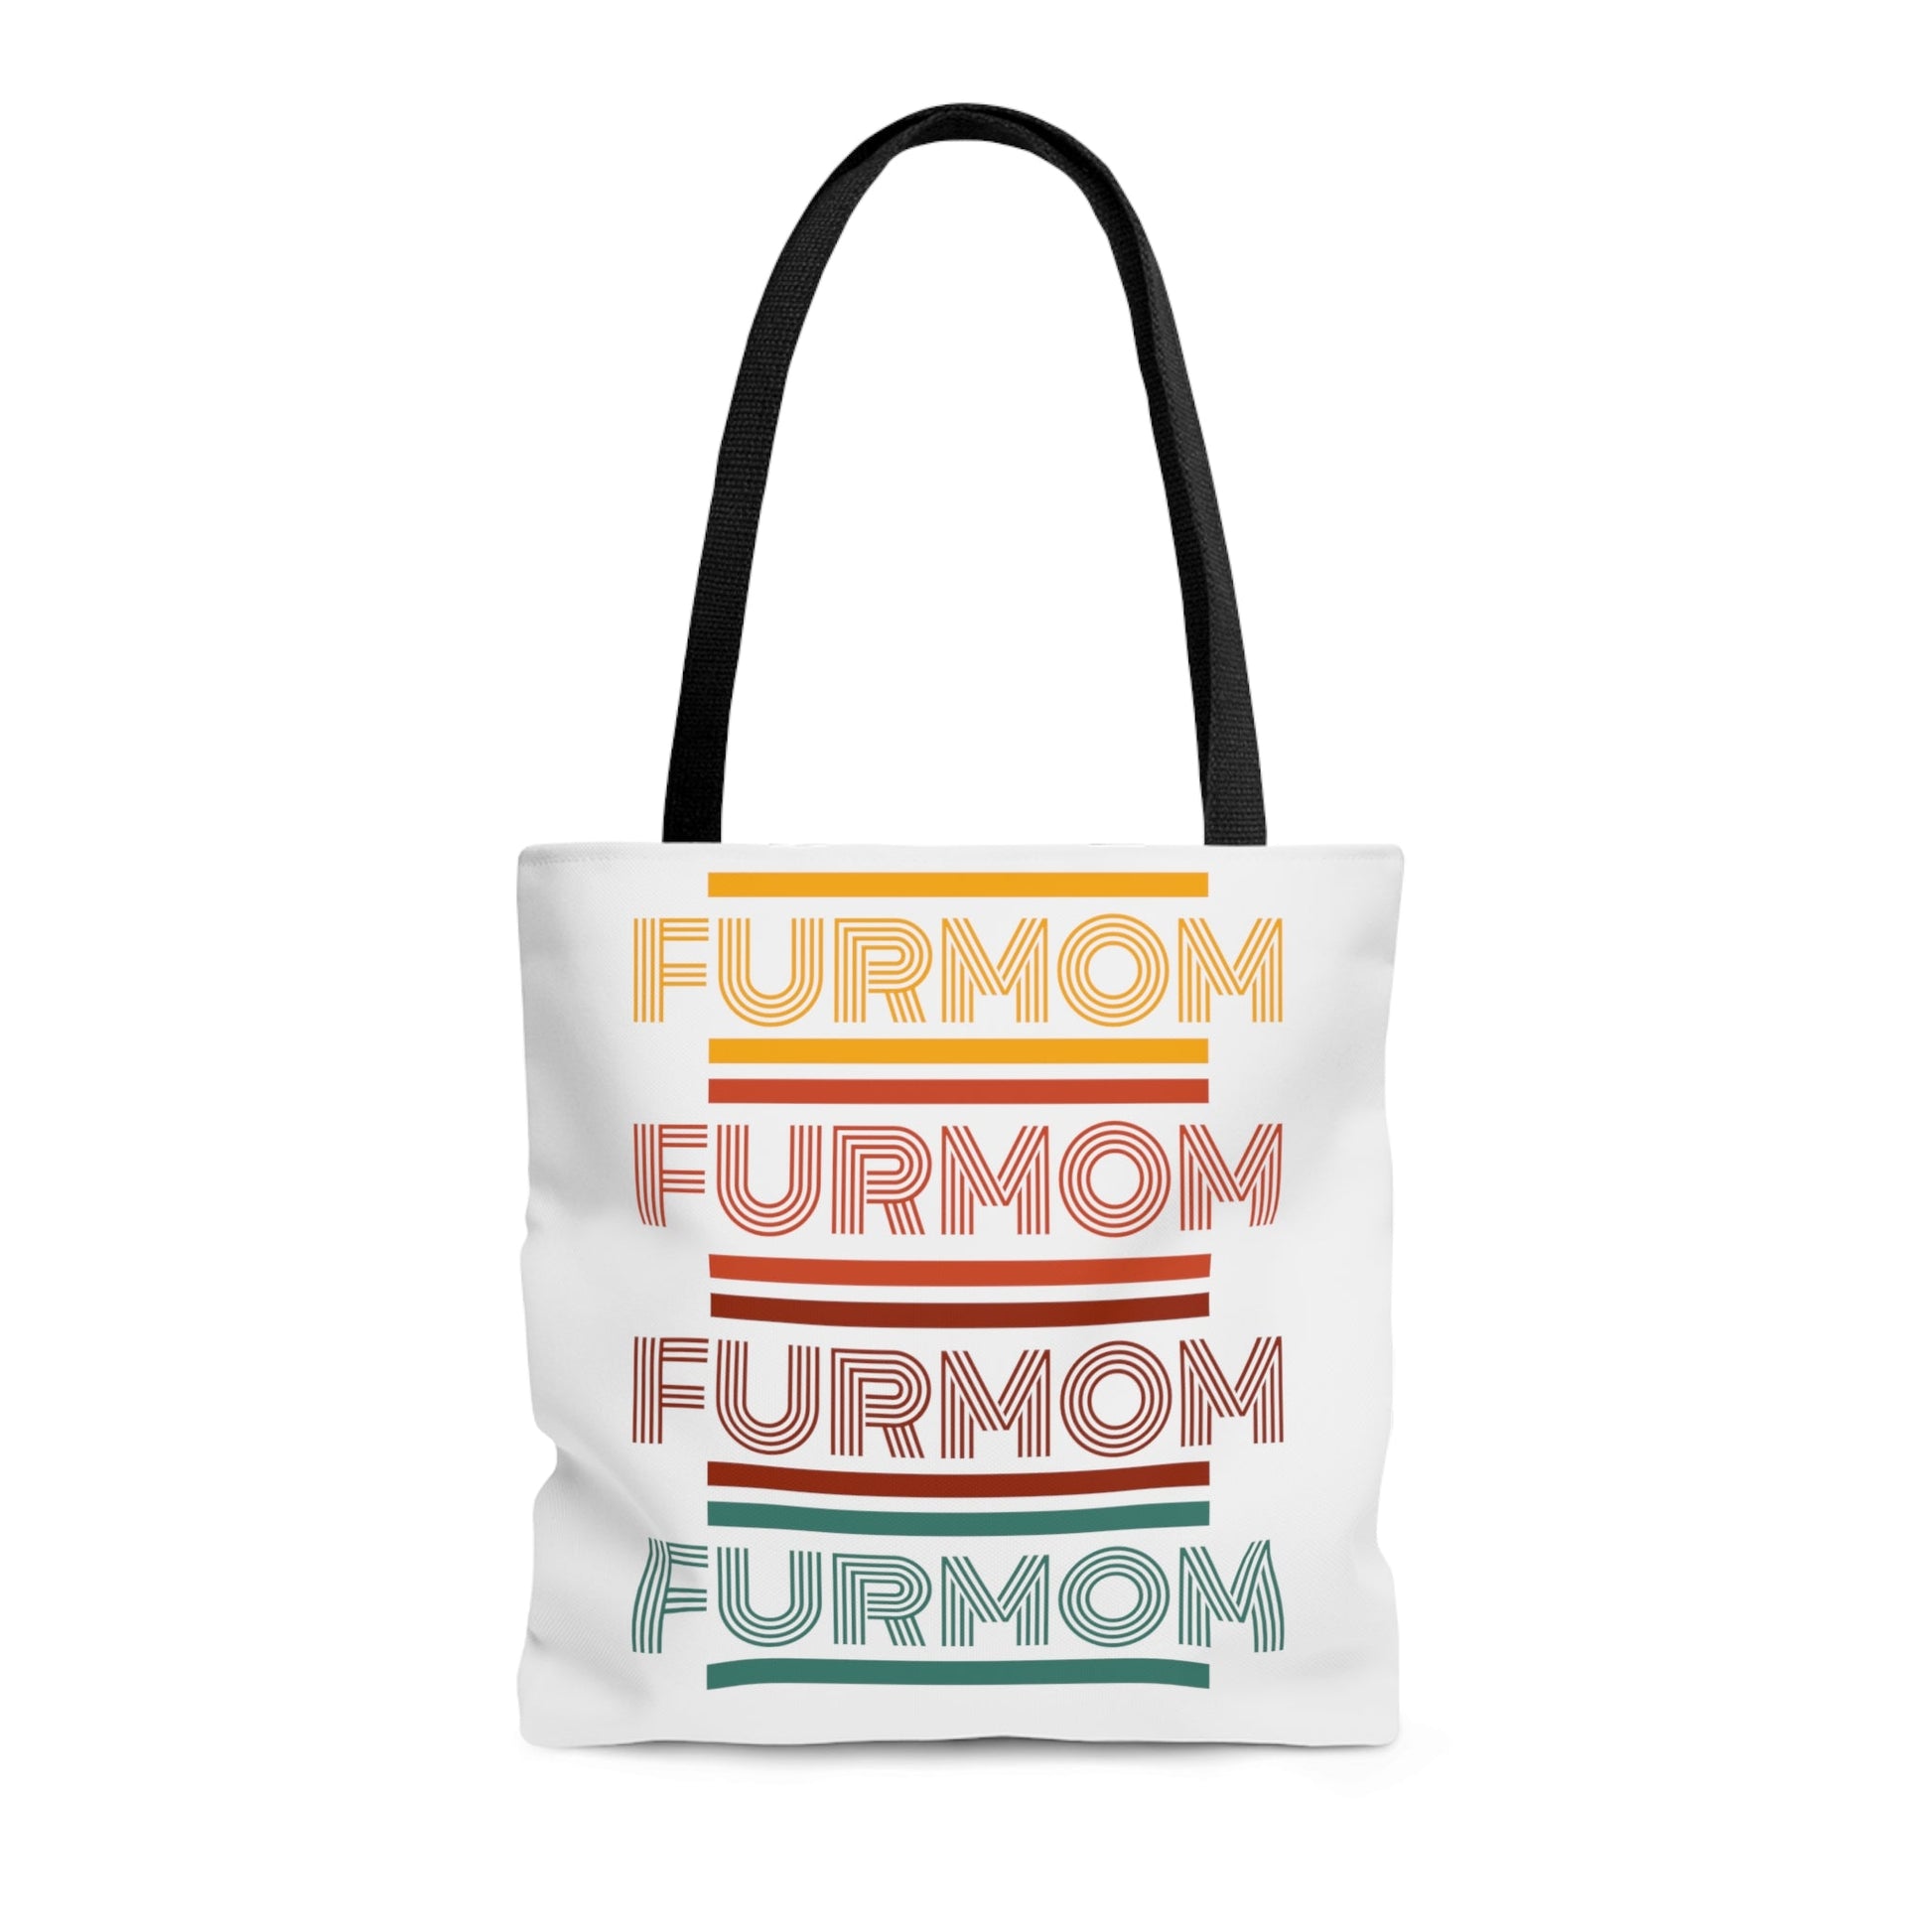 FURMOM Tote Bag - The muggin shop